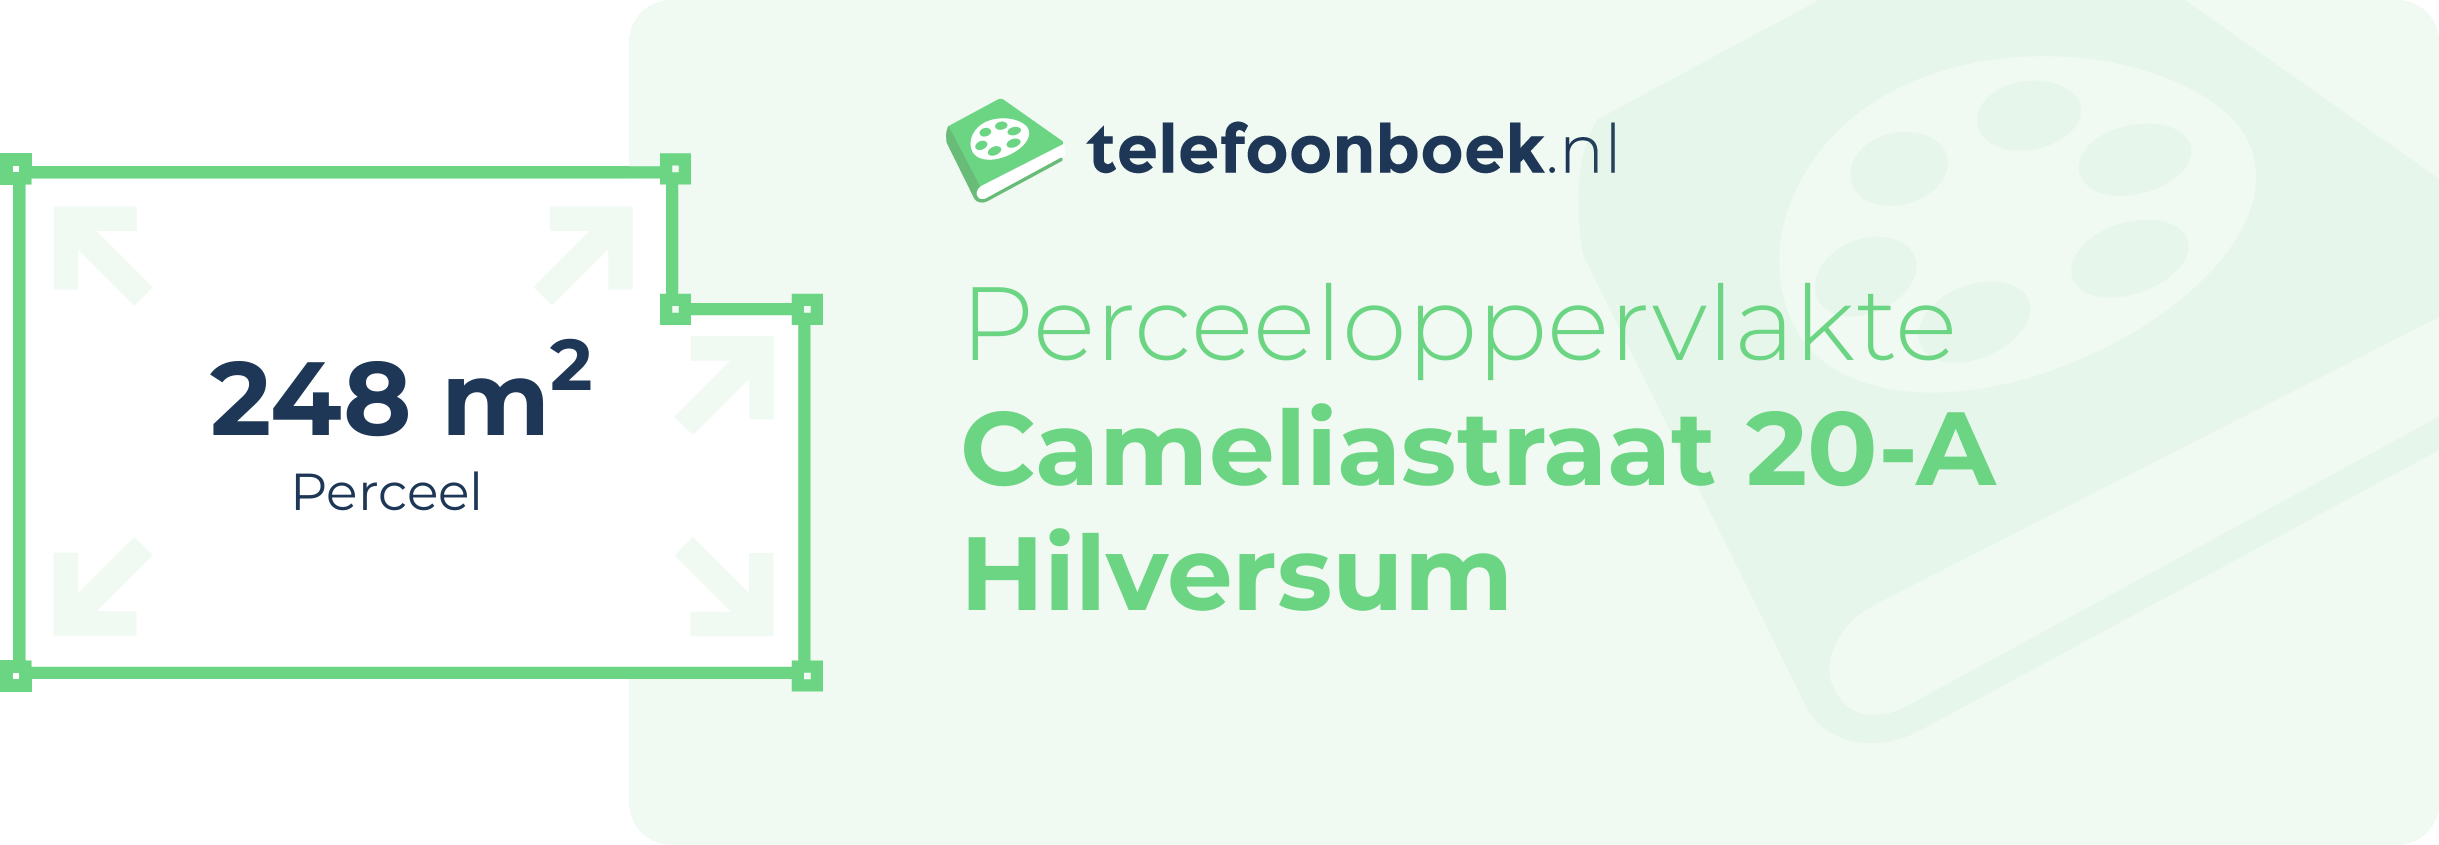 Perceeloppervlakte Cameliastraat 20-A Hilversum